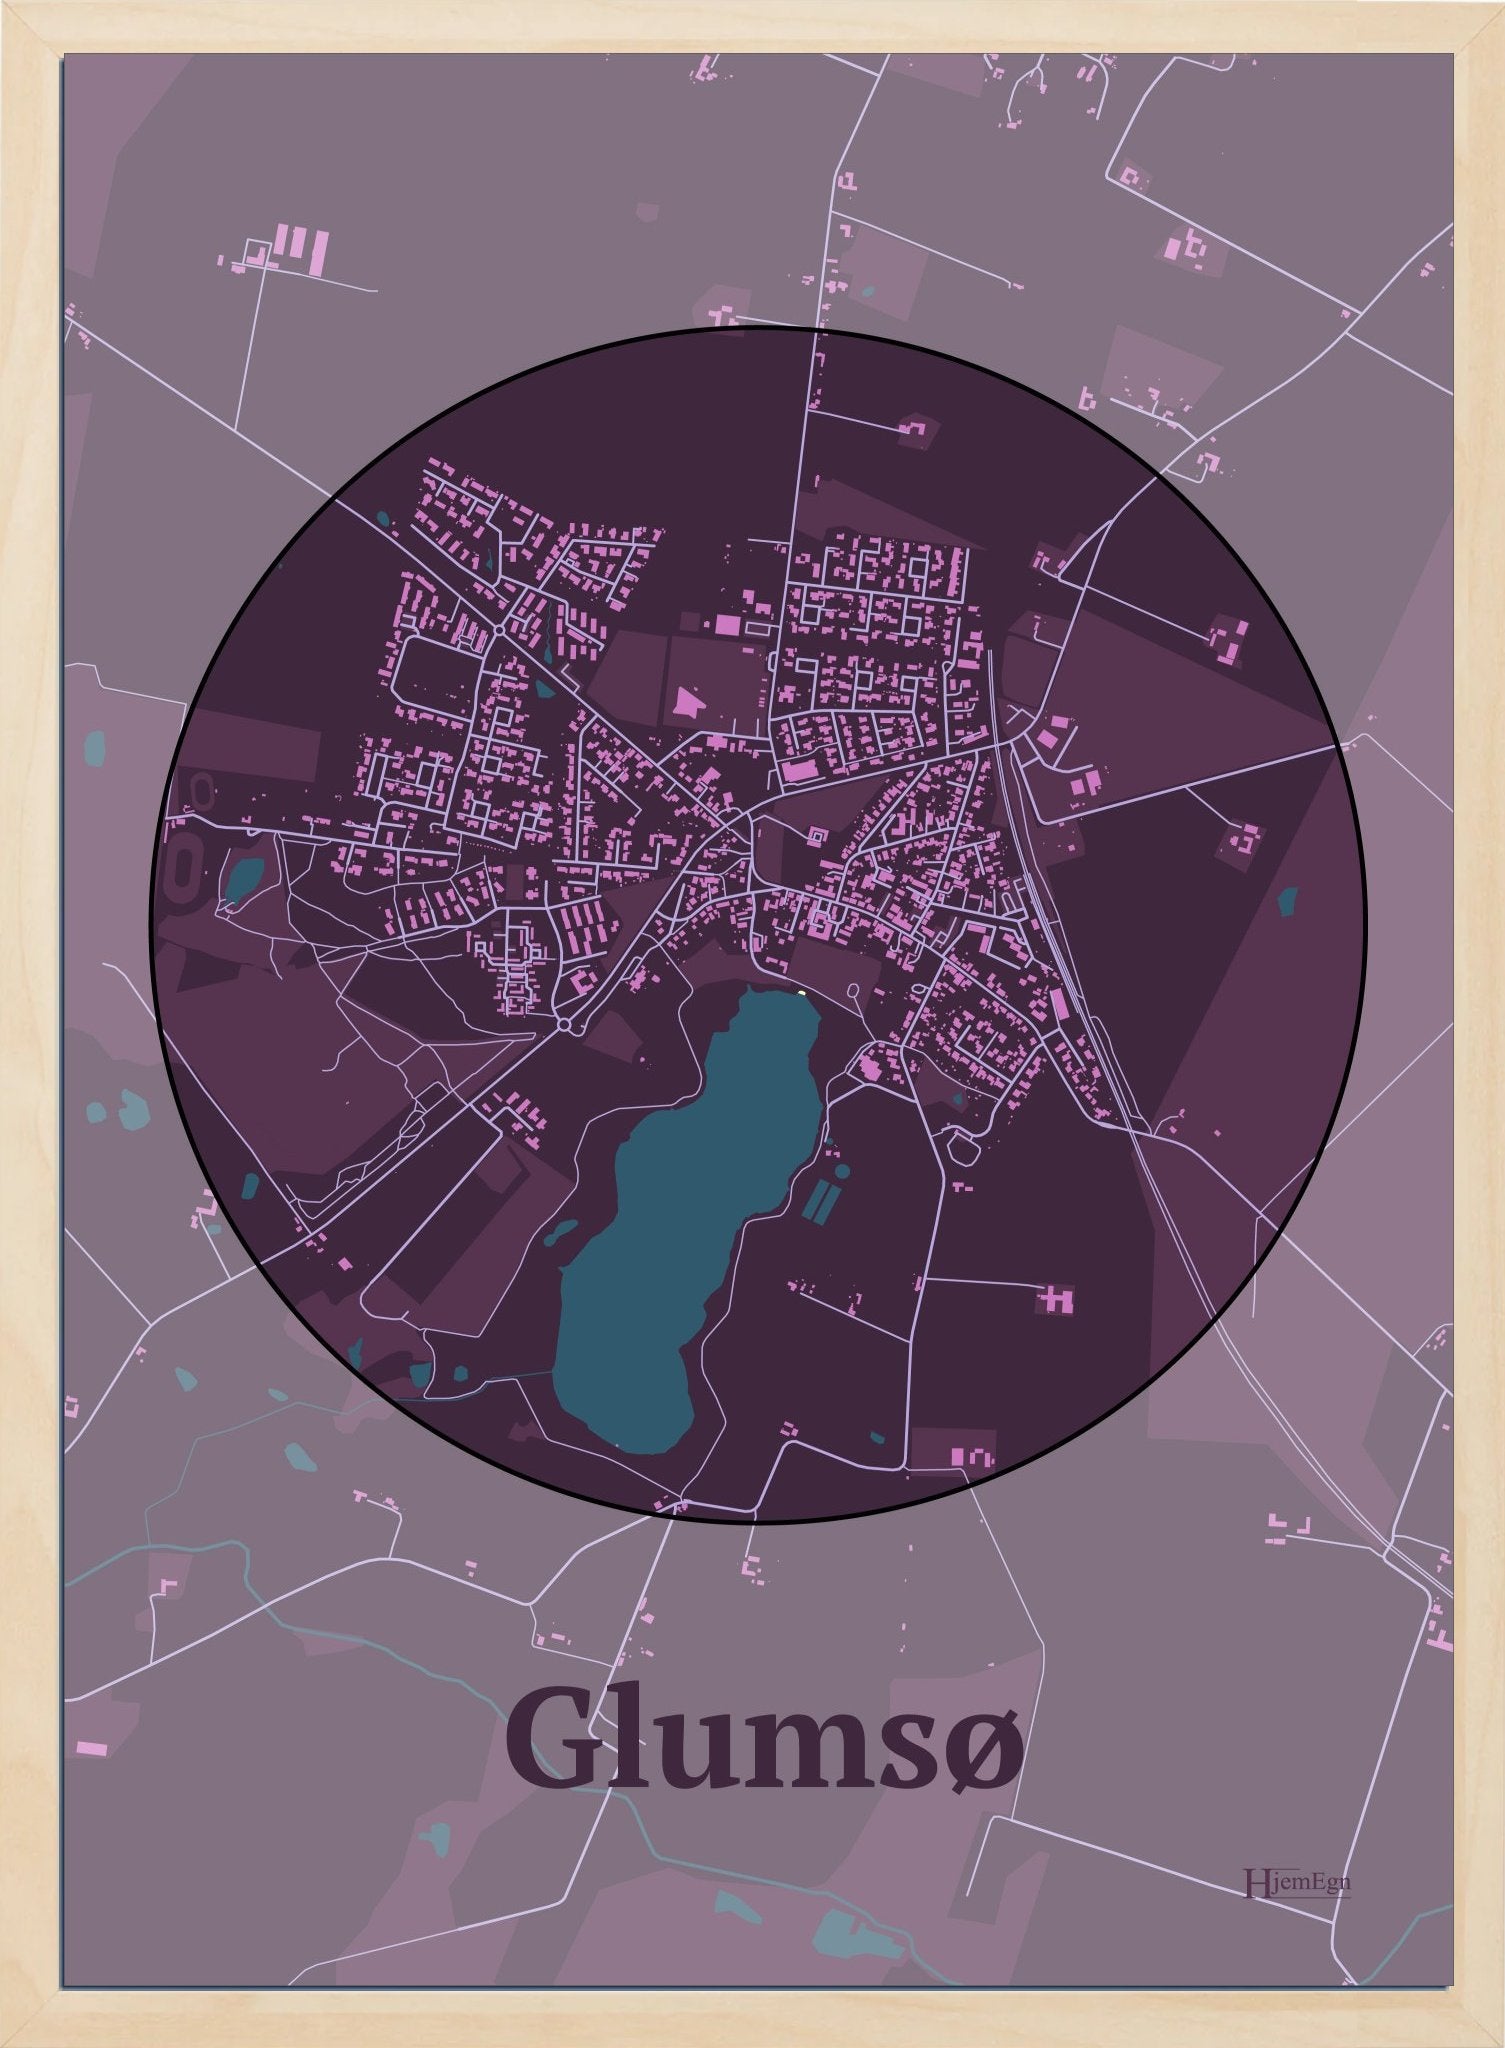 Glumsø plakat i farve mørk rød og HjemEgn.dk design centrum. Design bykort for Glumsø